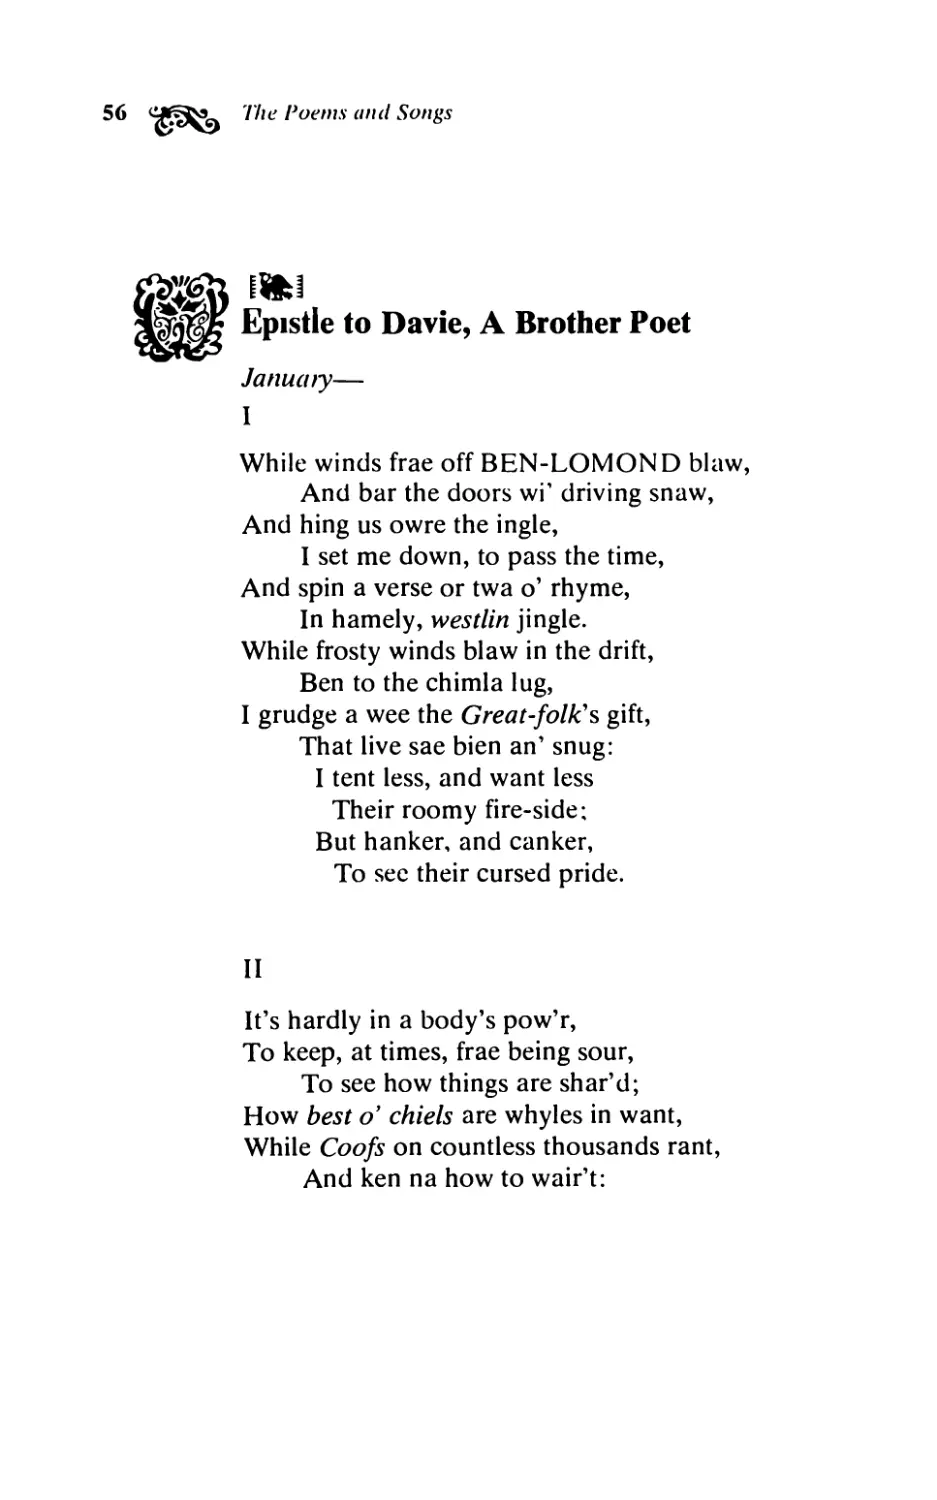 Epistle to Davie, A Brother Poet